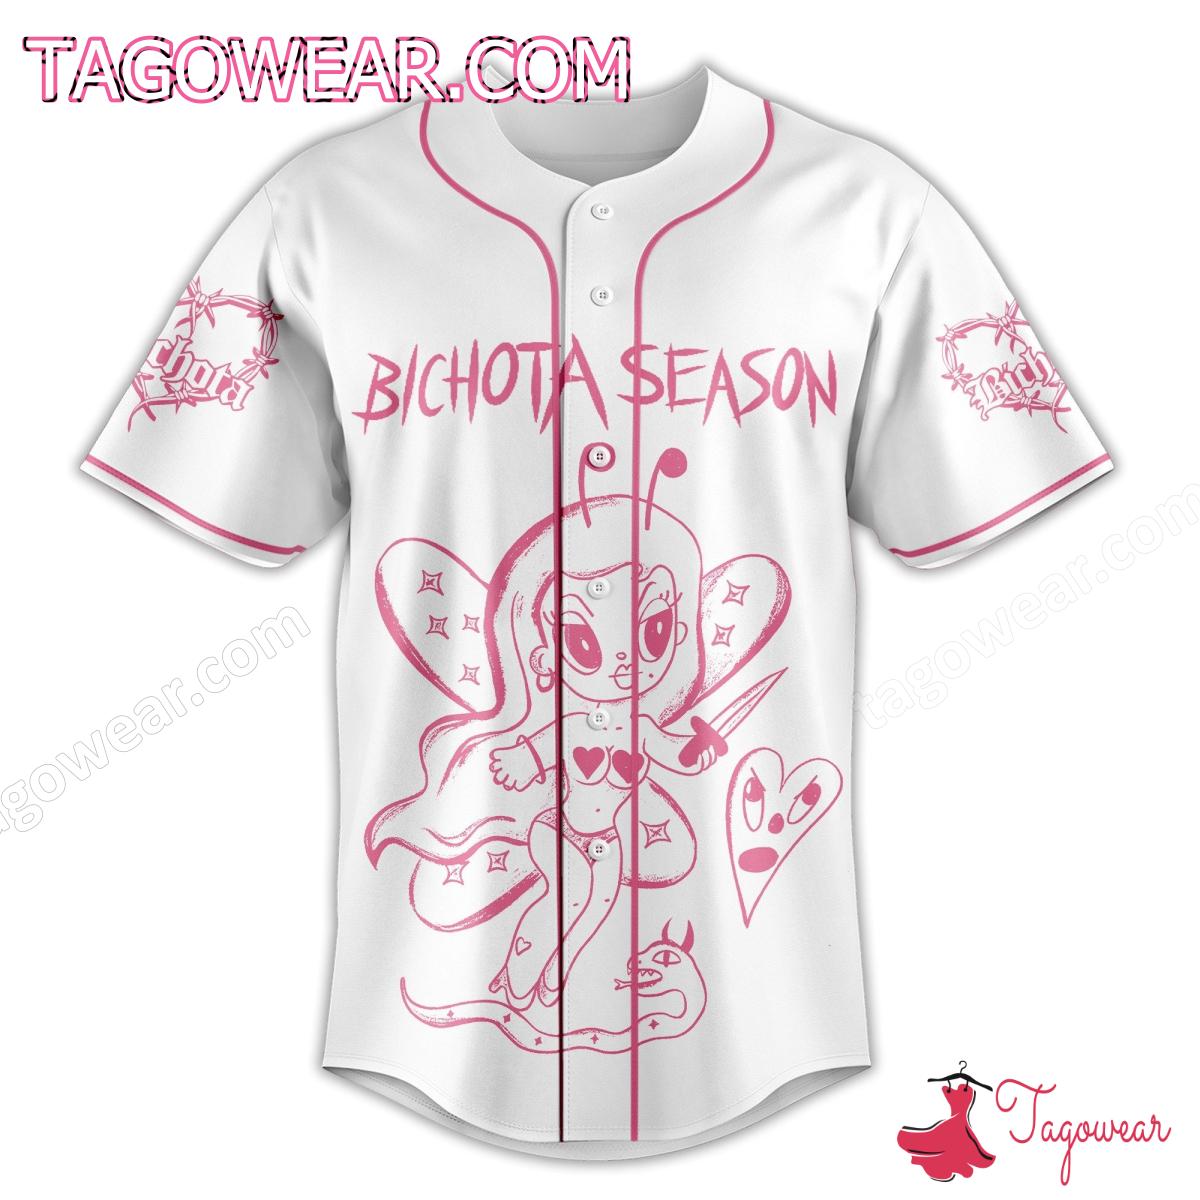 Bichota Season Karol G Manana Sera Bonito Baseball Jersey a